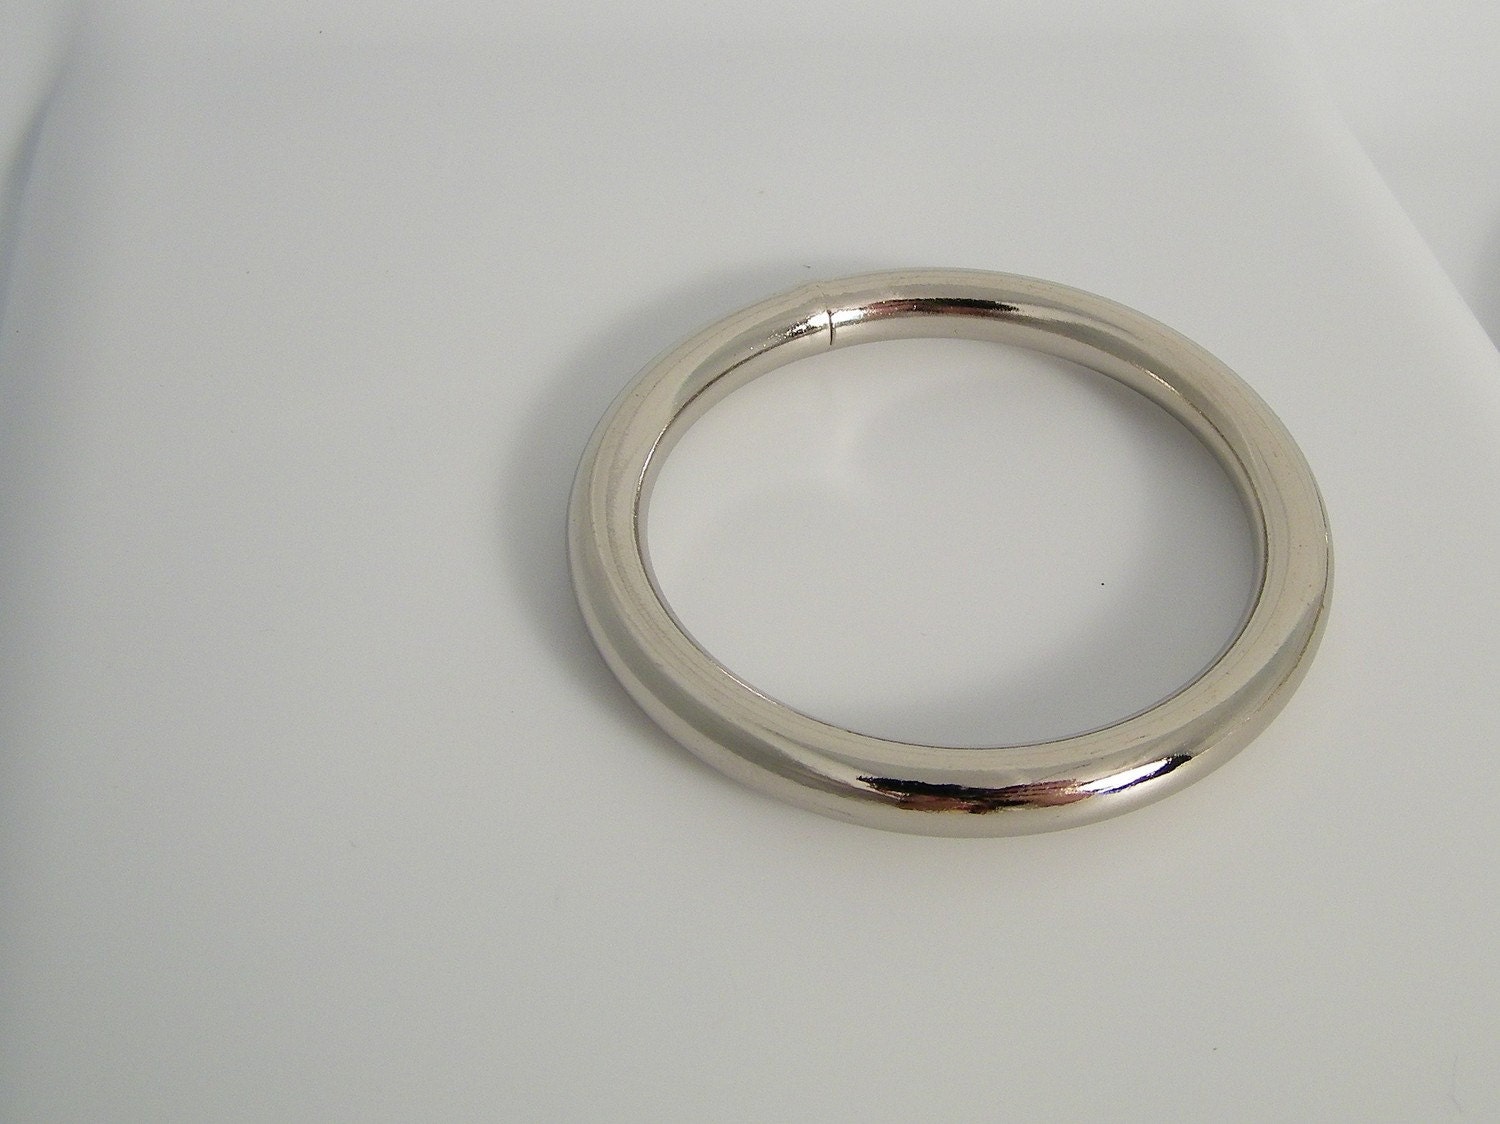 Nickel Ring